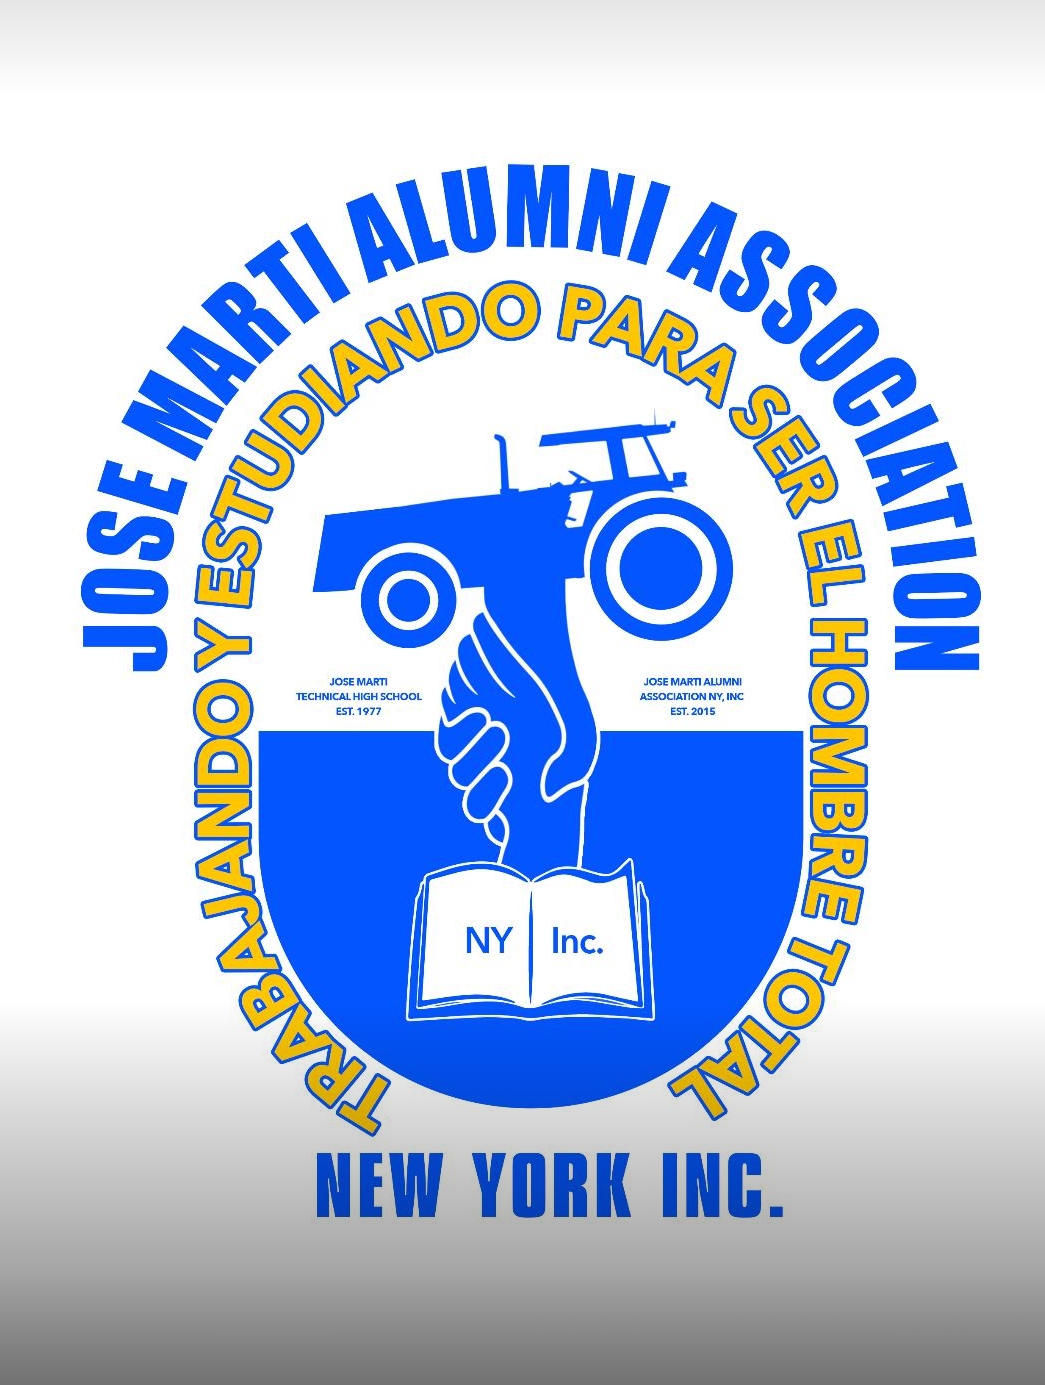 Jose Marti Alumni Association NY, Inc logo